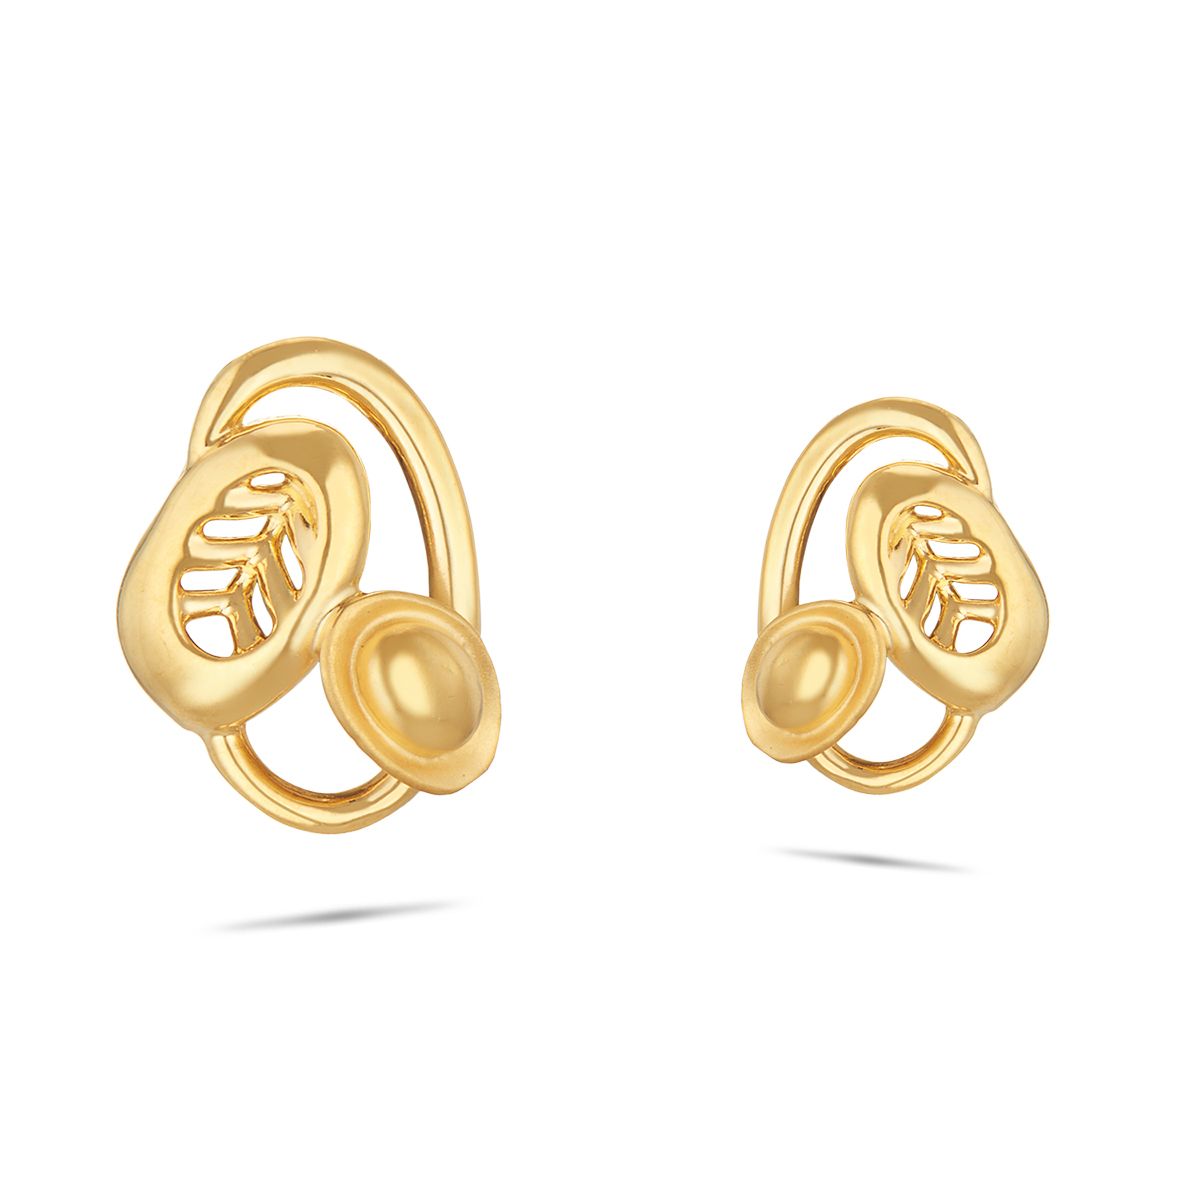 22k Gold Stud Earring Indian Handmade 22kt Fine Gold Women Earrings | eBay